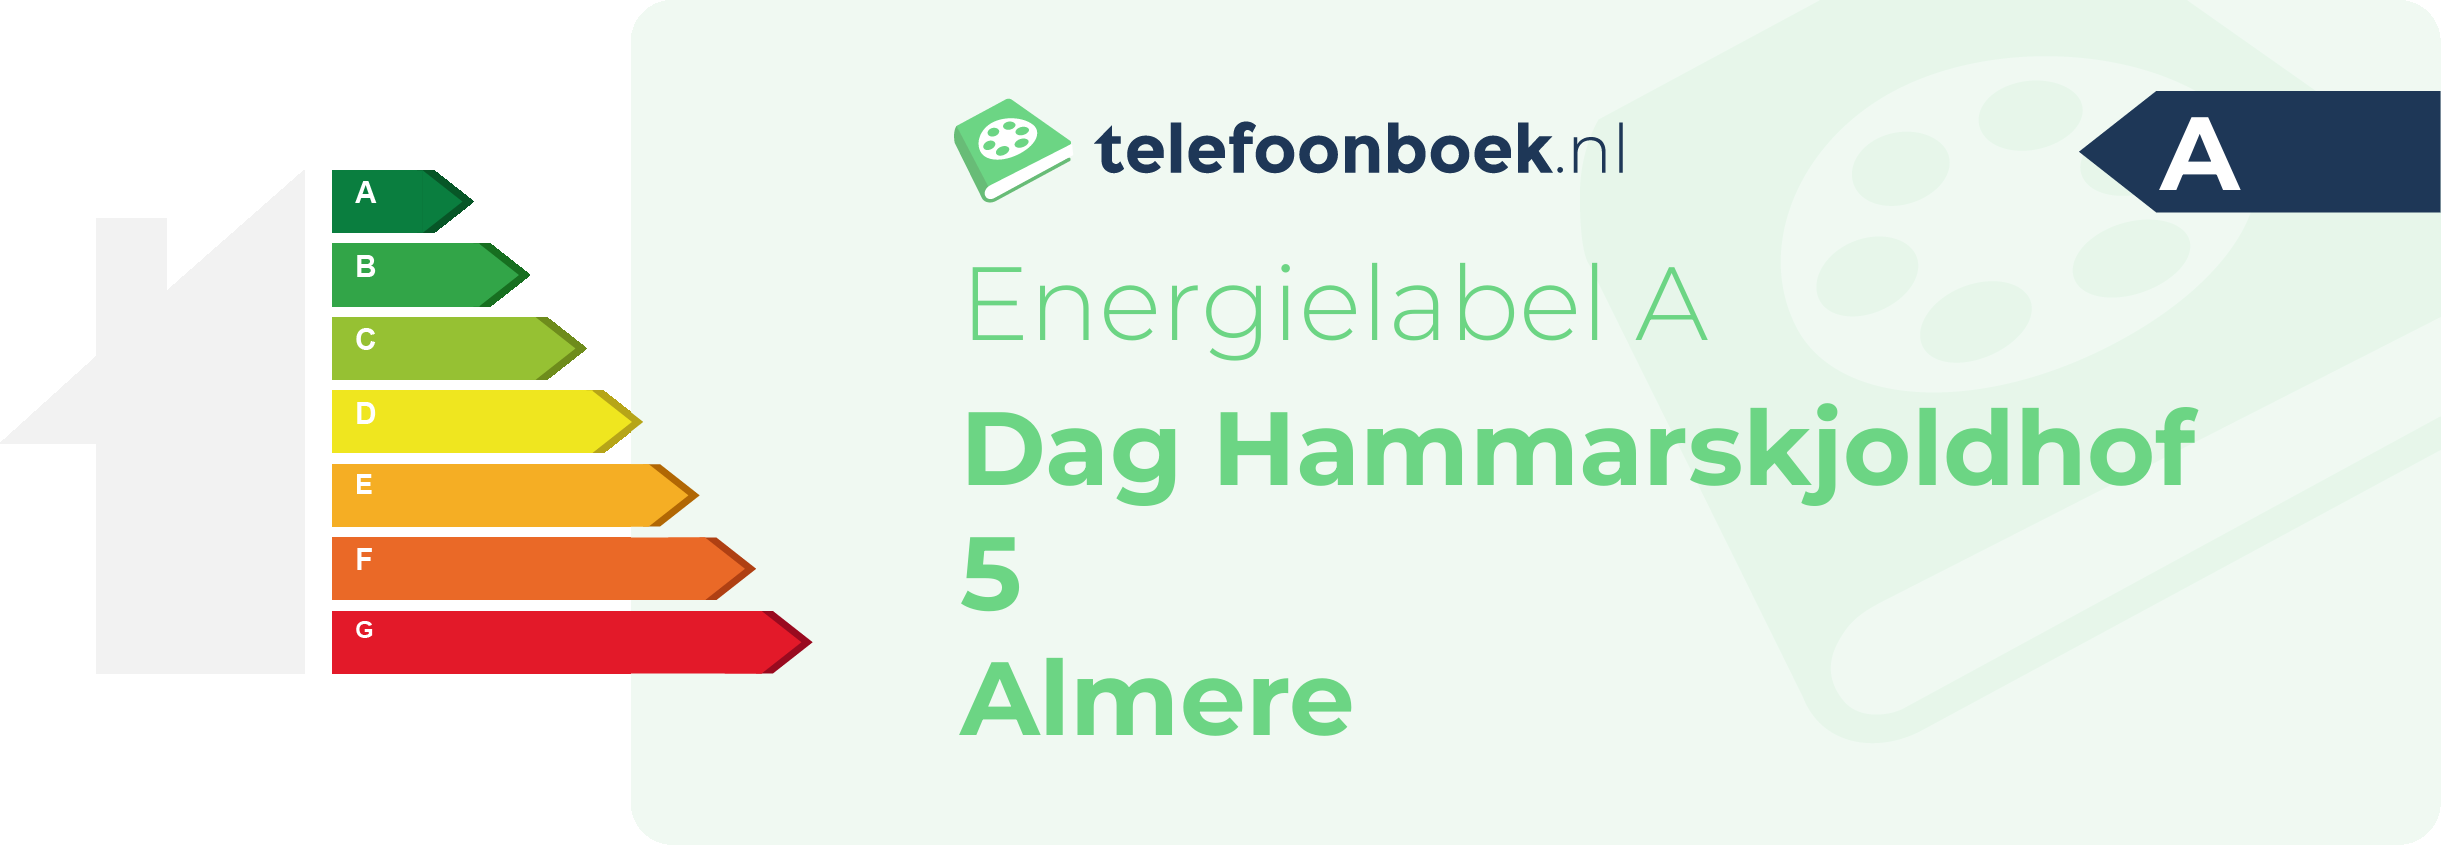 Energielabel Dag Hammarskjoldhof 5 Almere